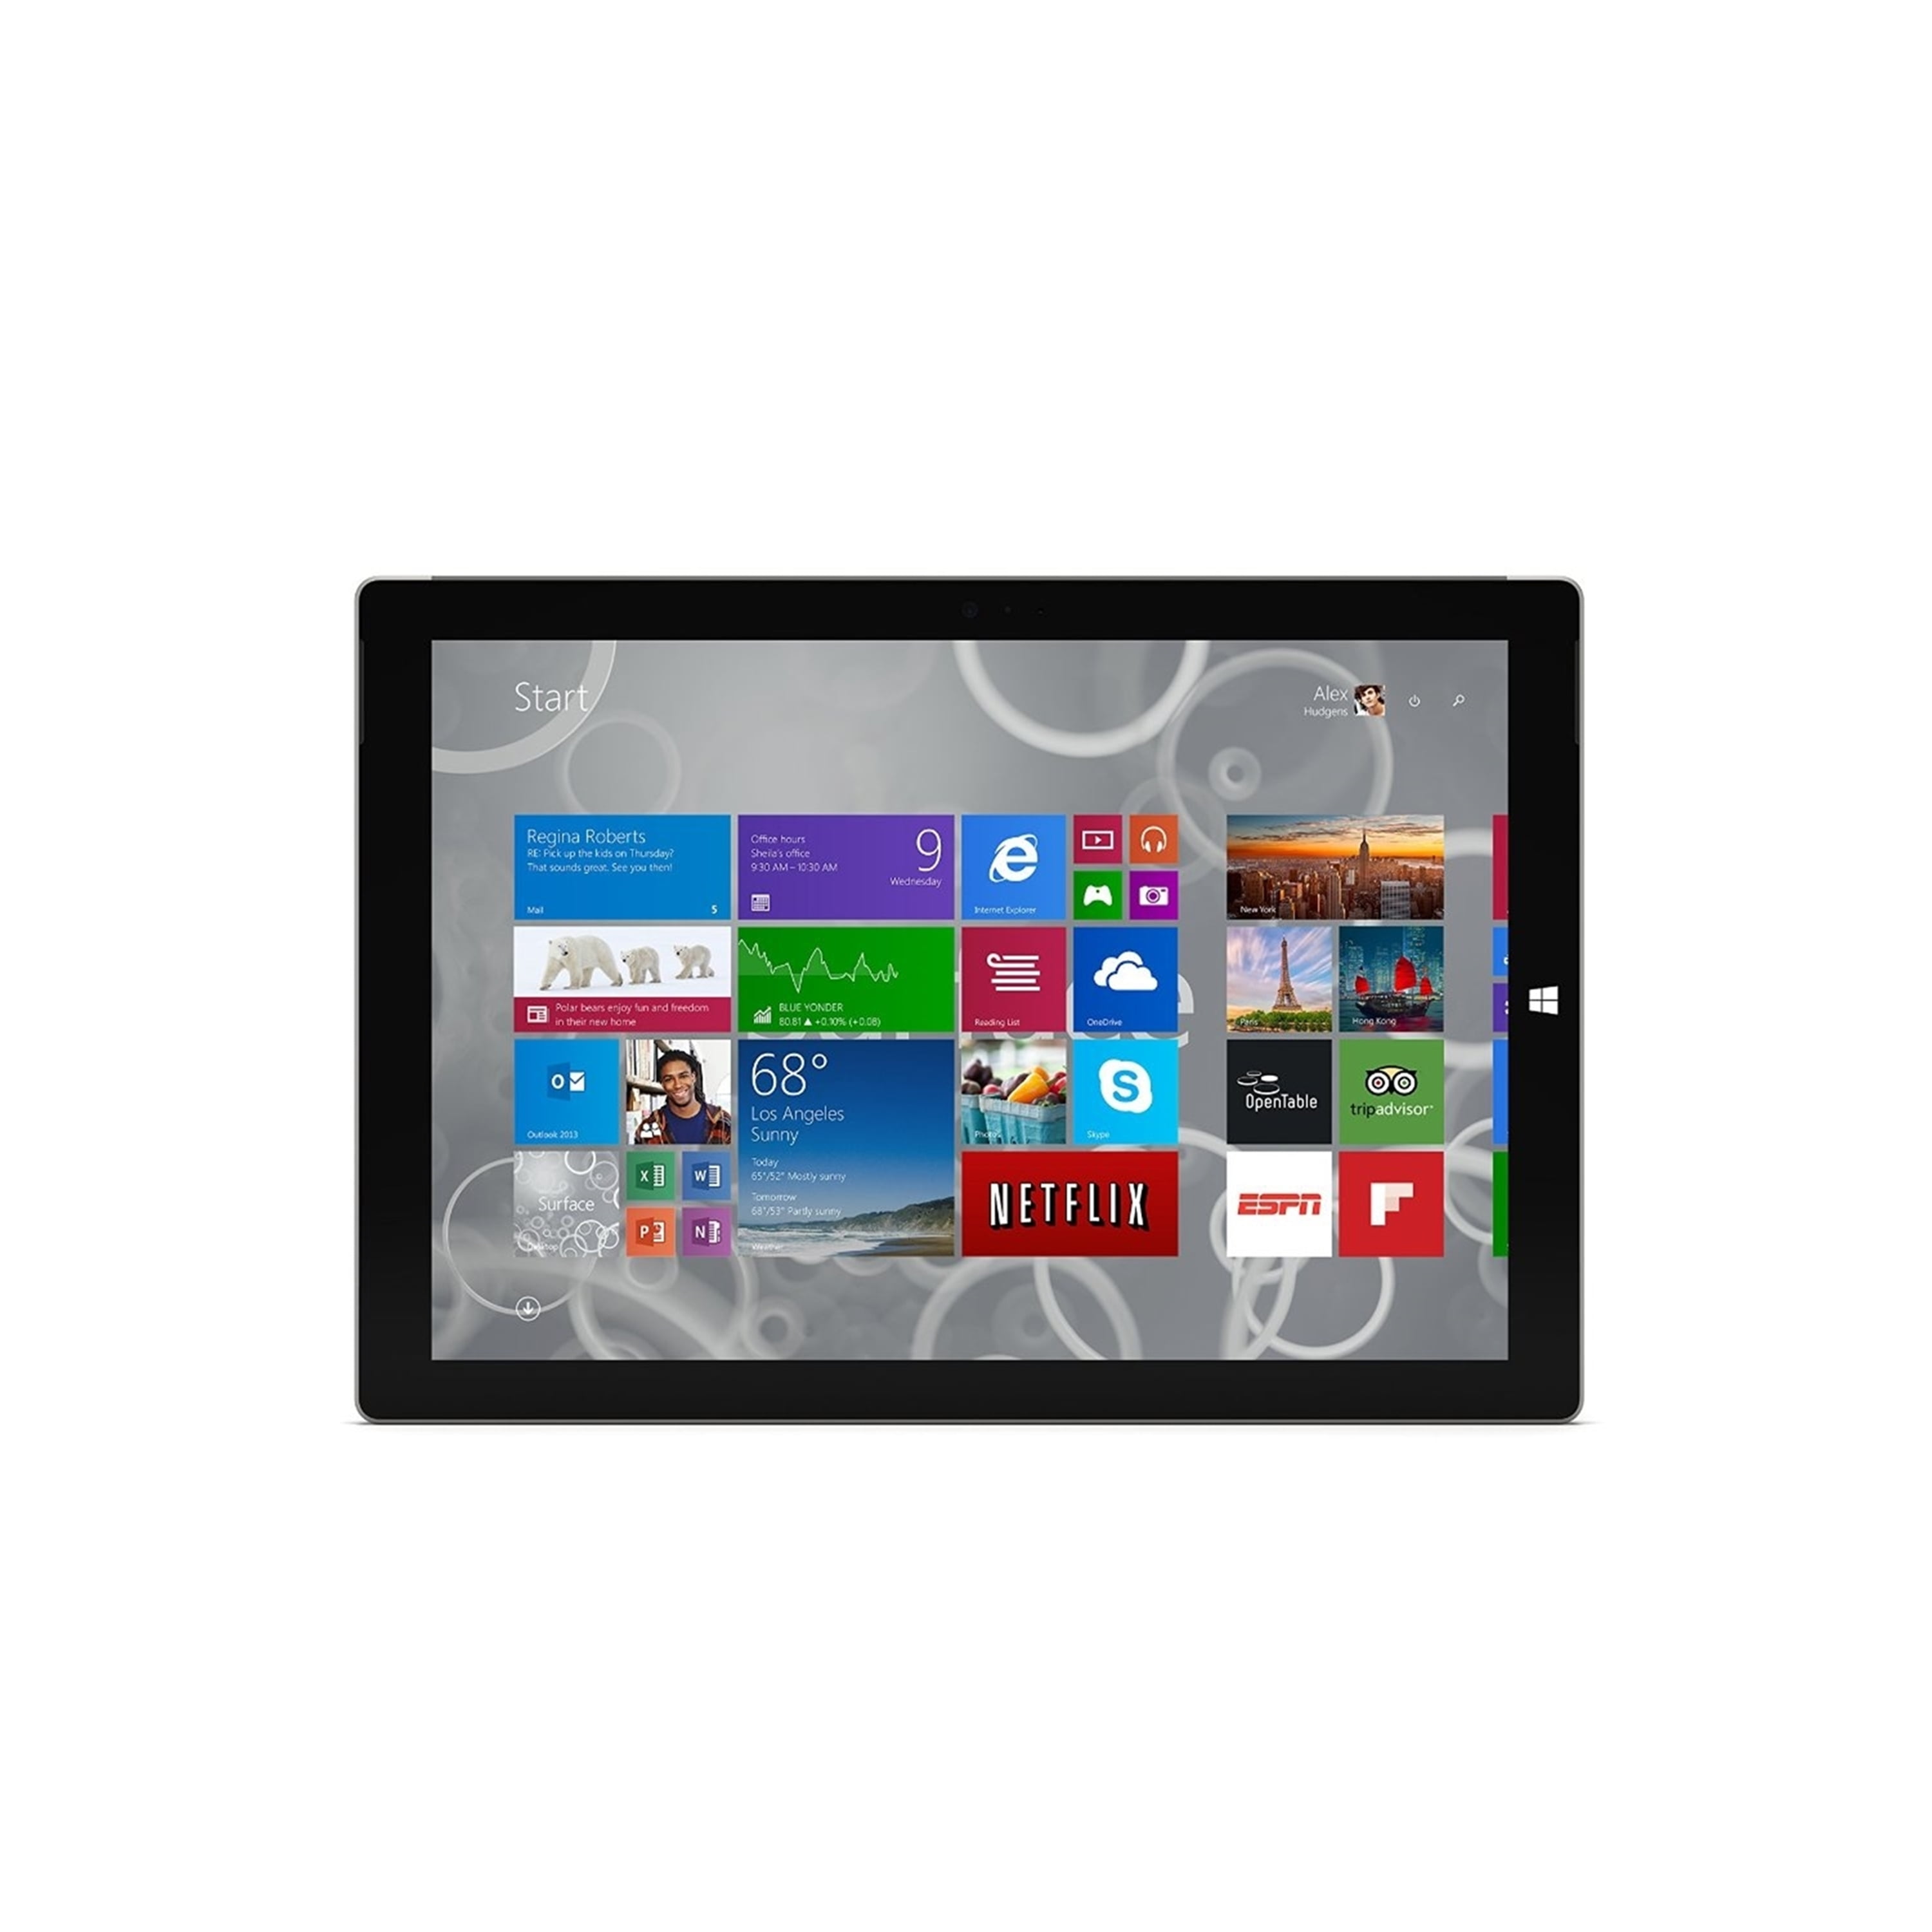 Microsoft Surface Pro 3 - Tablet - Core i5 4300U / 1.9 GHz - Win 8.1 Pro  64-bit - 4 GB RAM - 128 GB SSD - 12